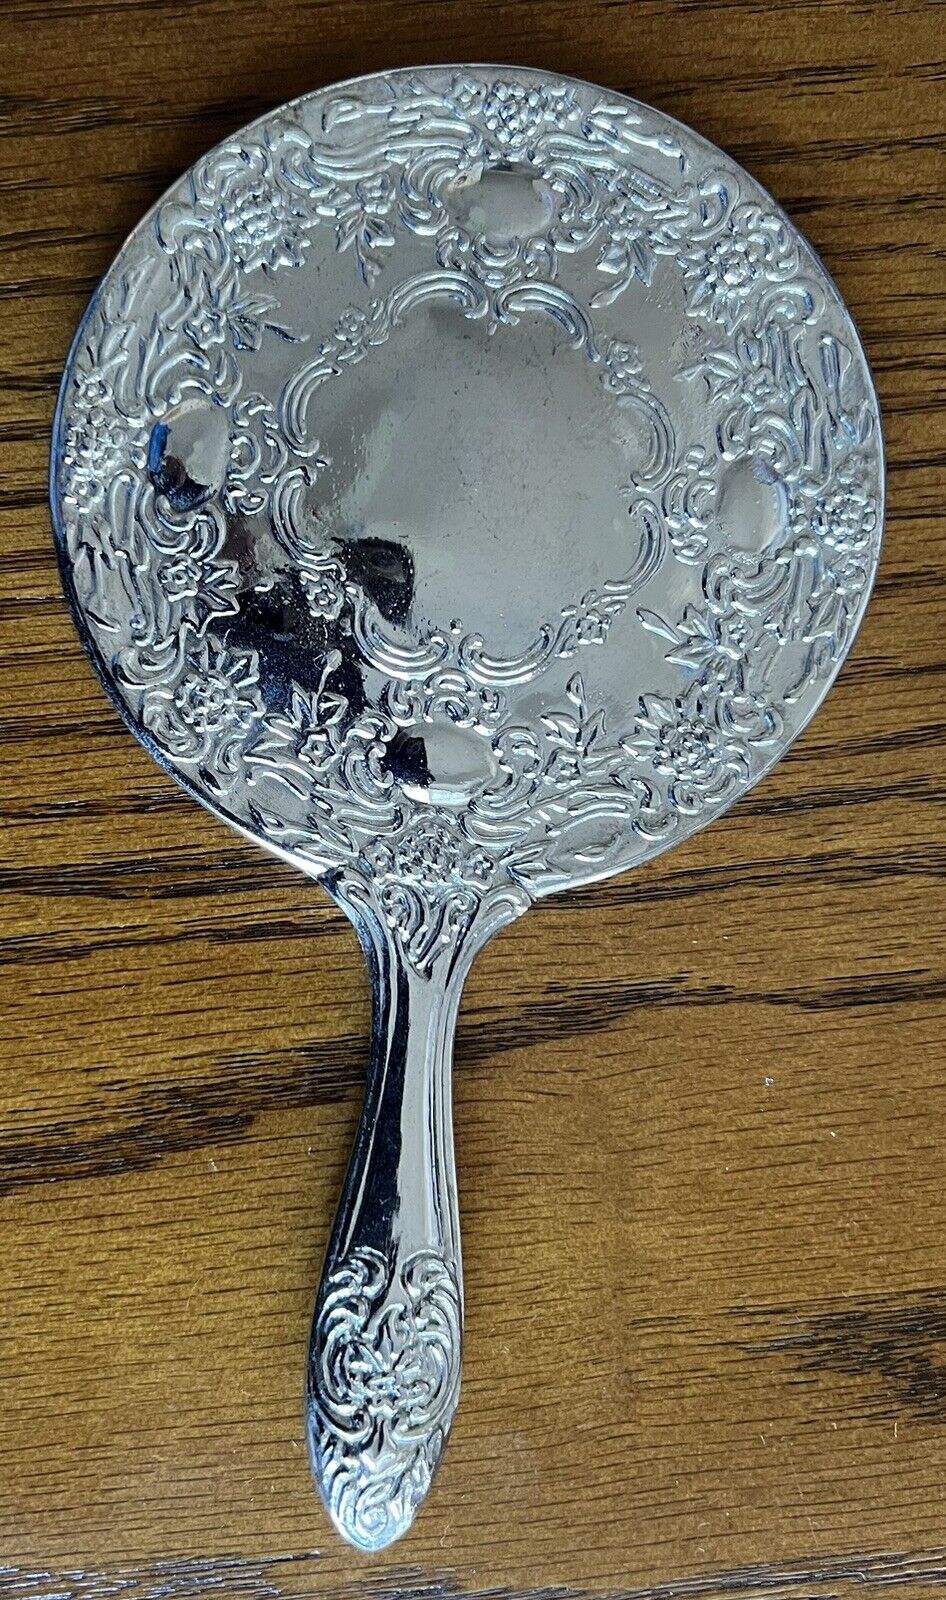 Antique Round Hand Held Vanity Silver Plate Mirror Heavy Ornate Floral Vintage